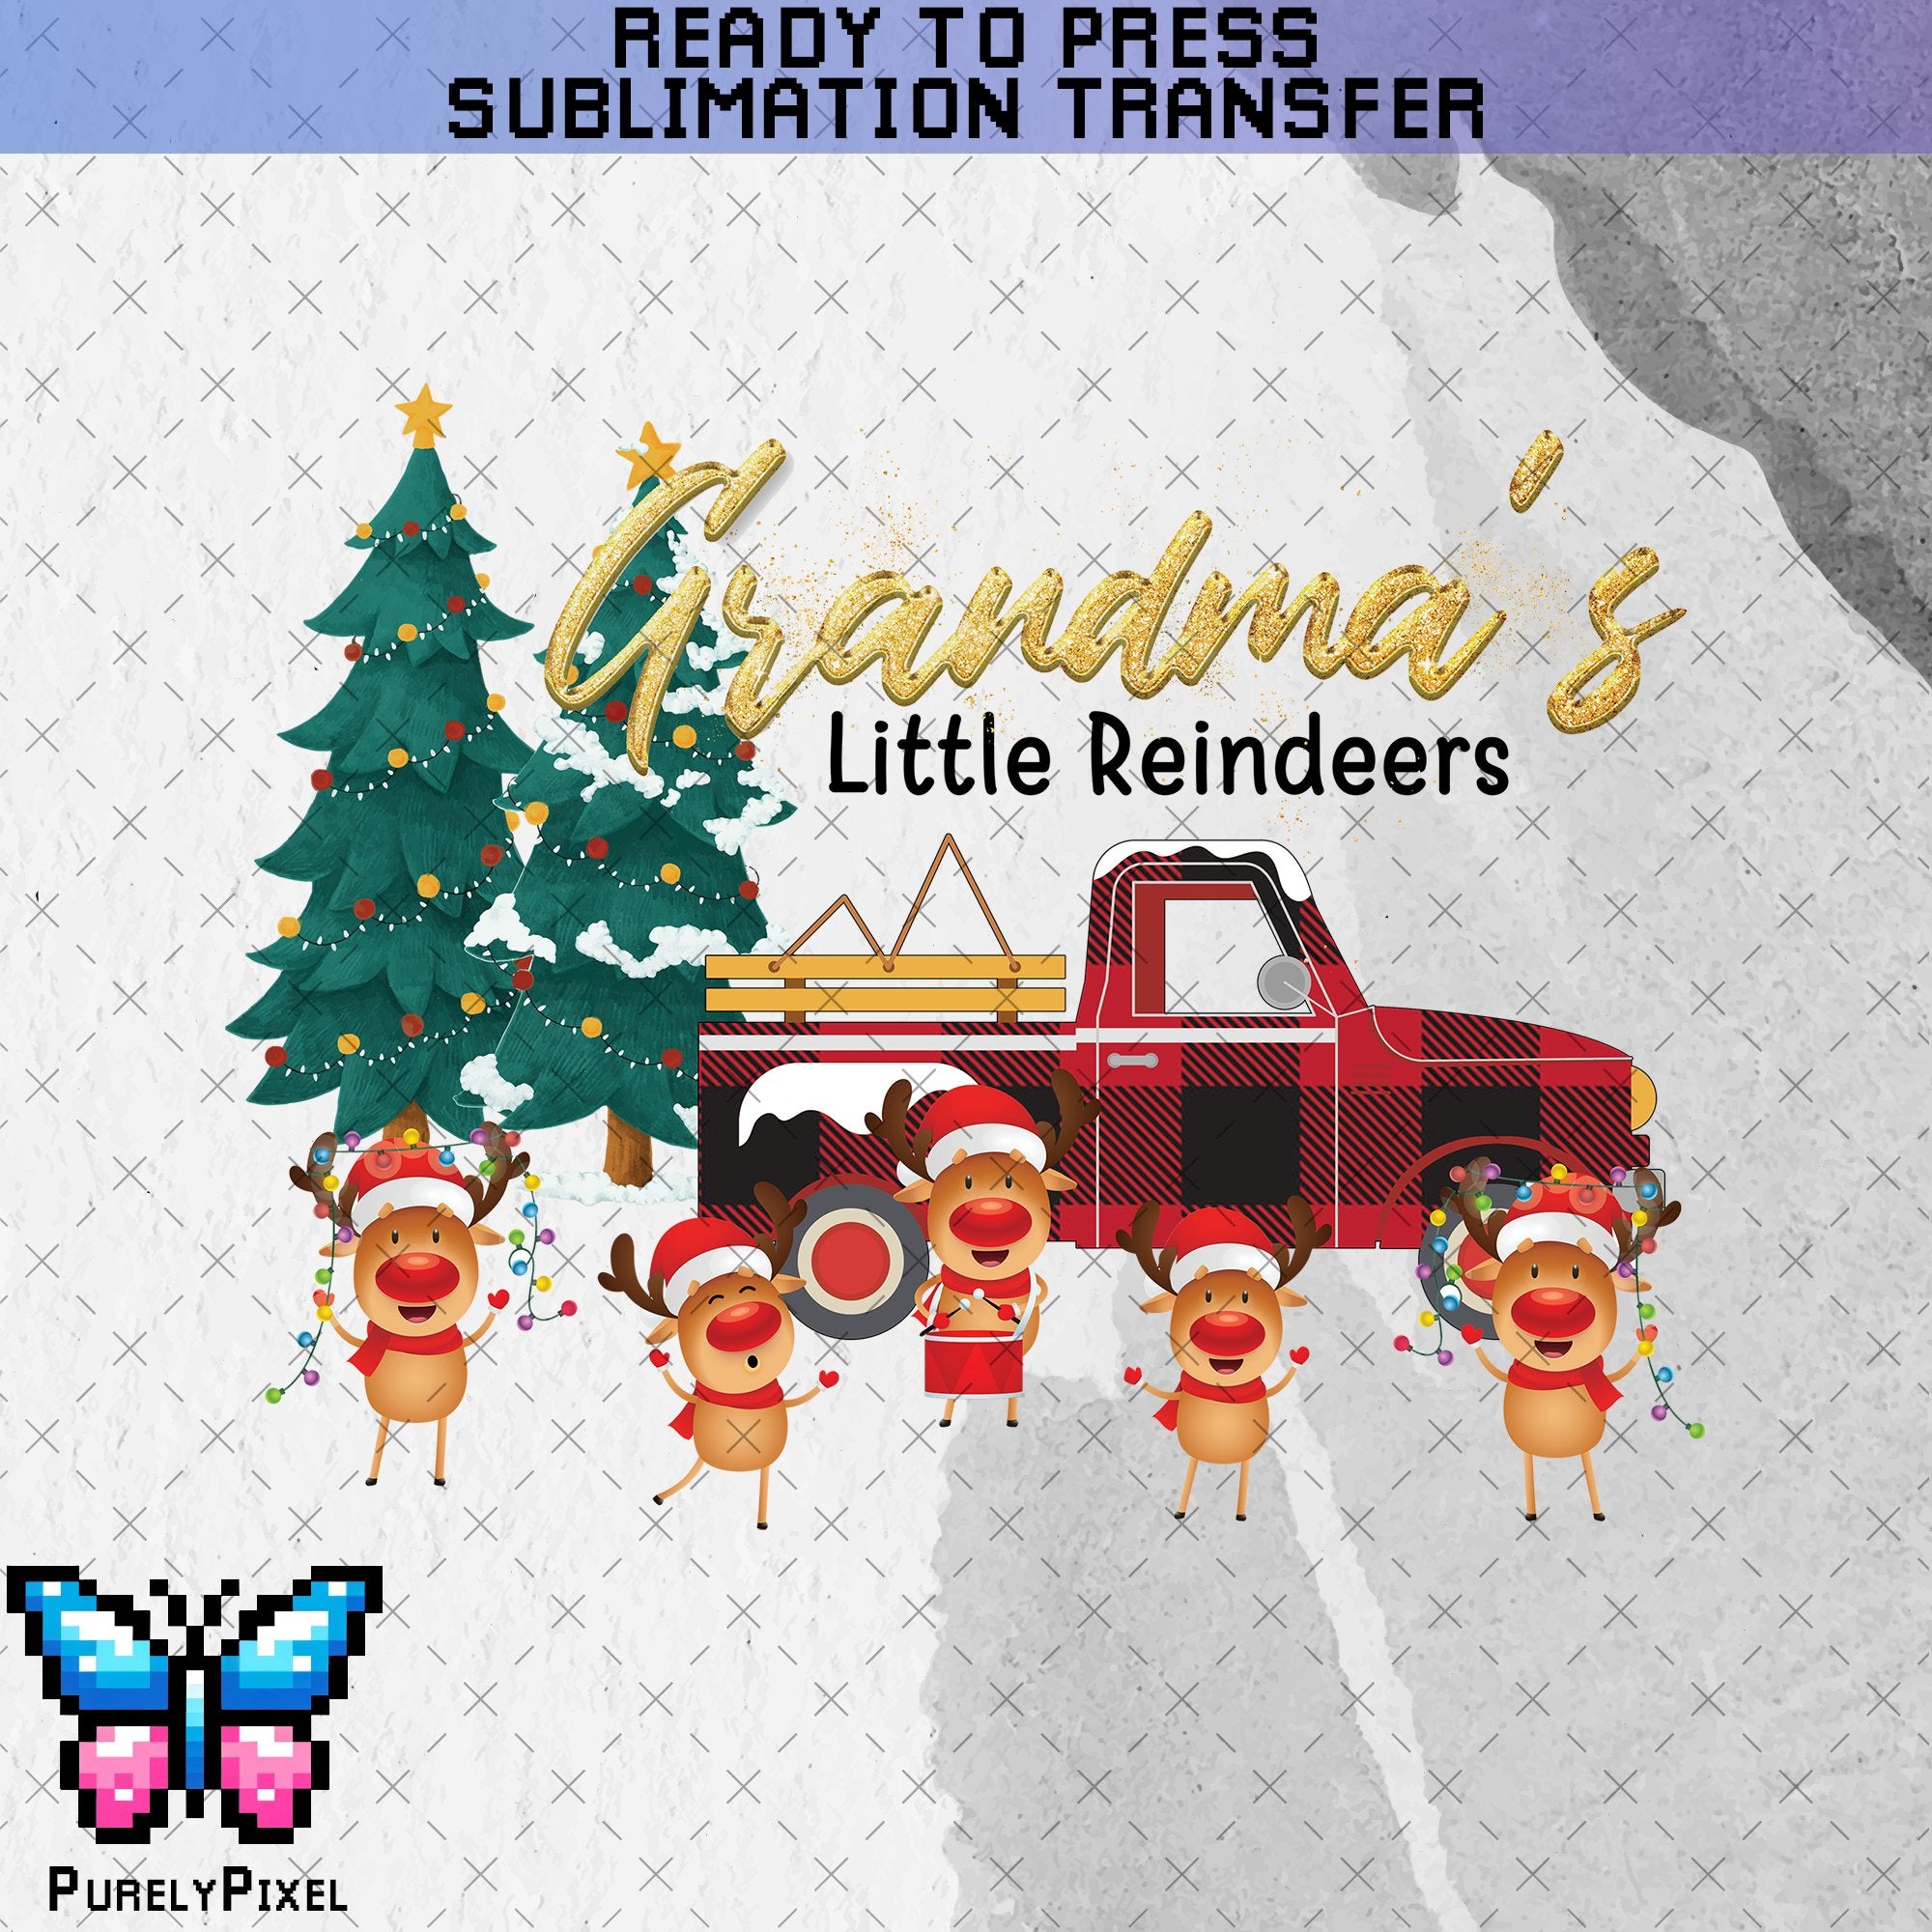 Grandmas' Little Reindeer Sub Transfer | Christmas Truck | Christmas Reindeer | Grandma Christmas | Ready to Press Sublimation Transfer | PurelyPixels | Sublimation Transfers